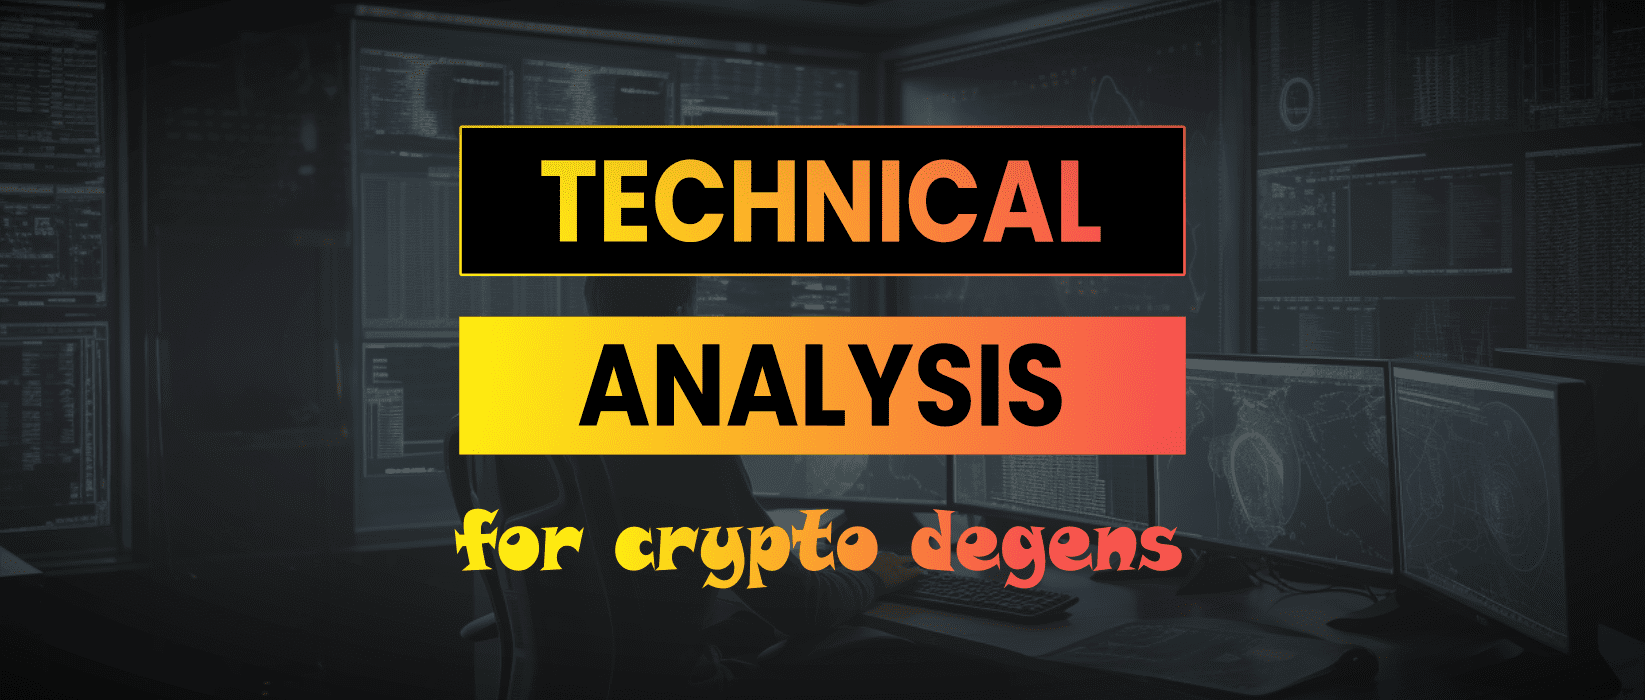 Technical Analysis For Crypto Degenerates